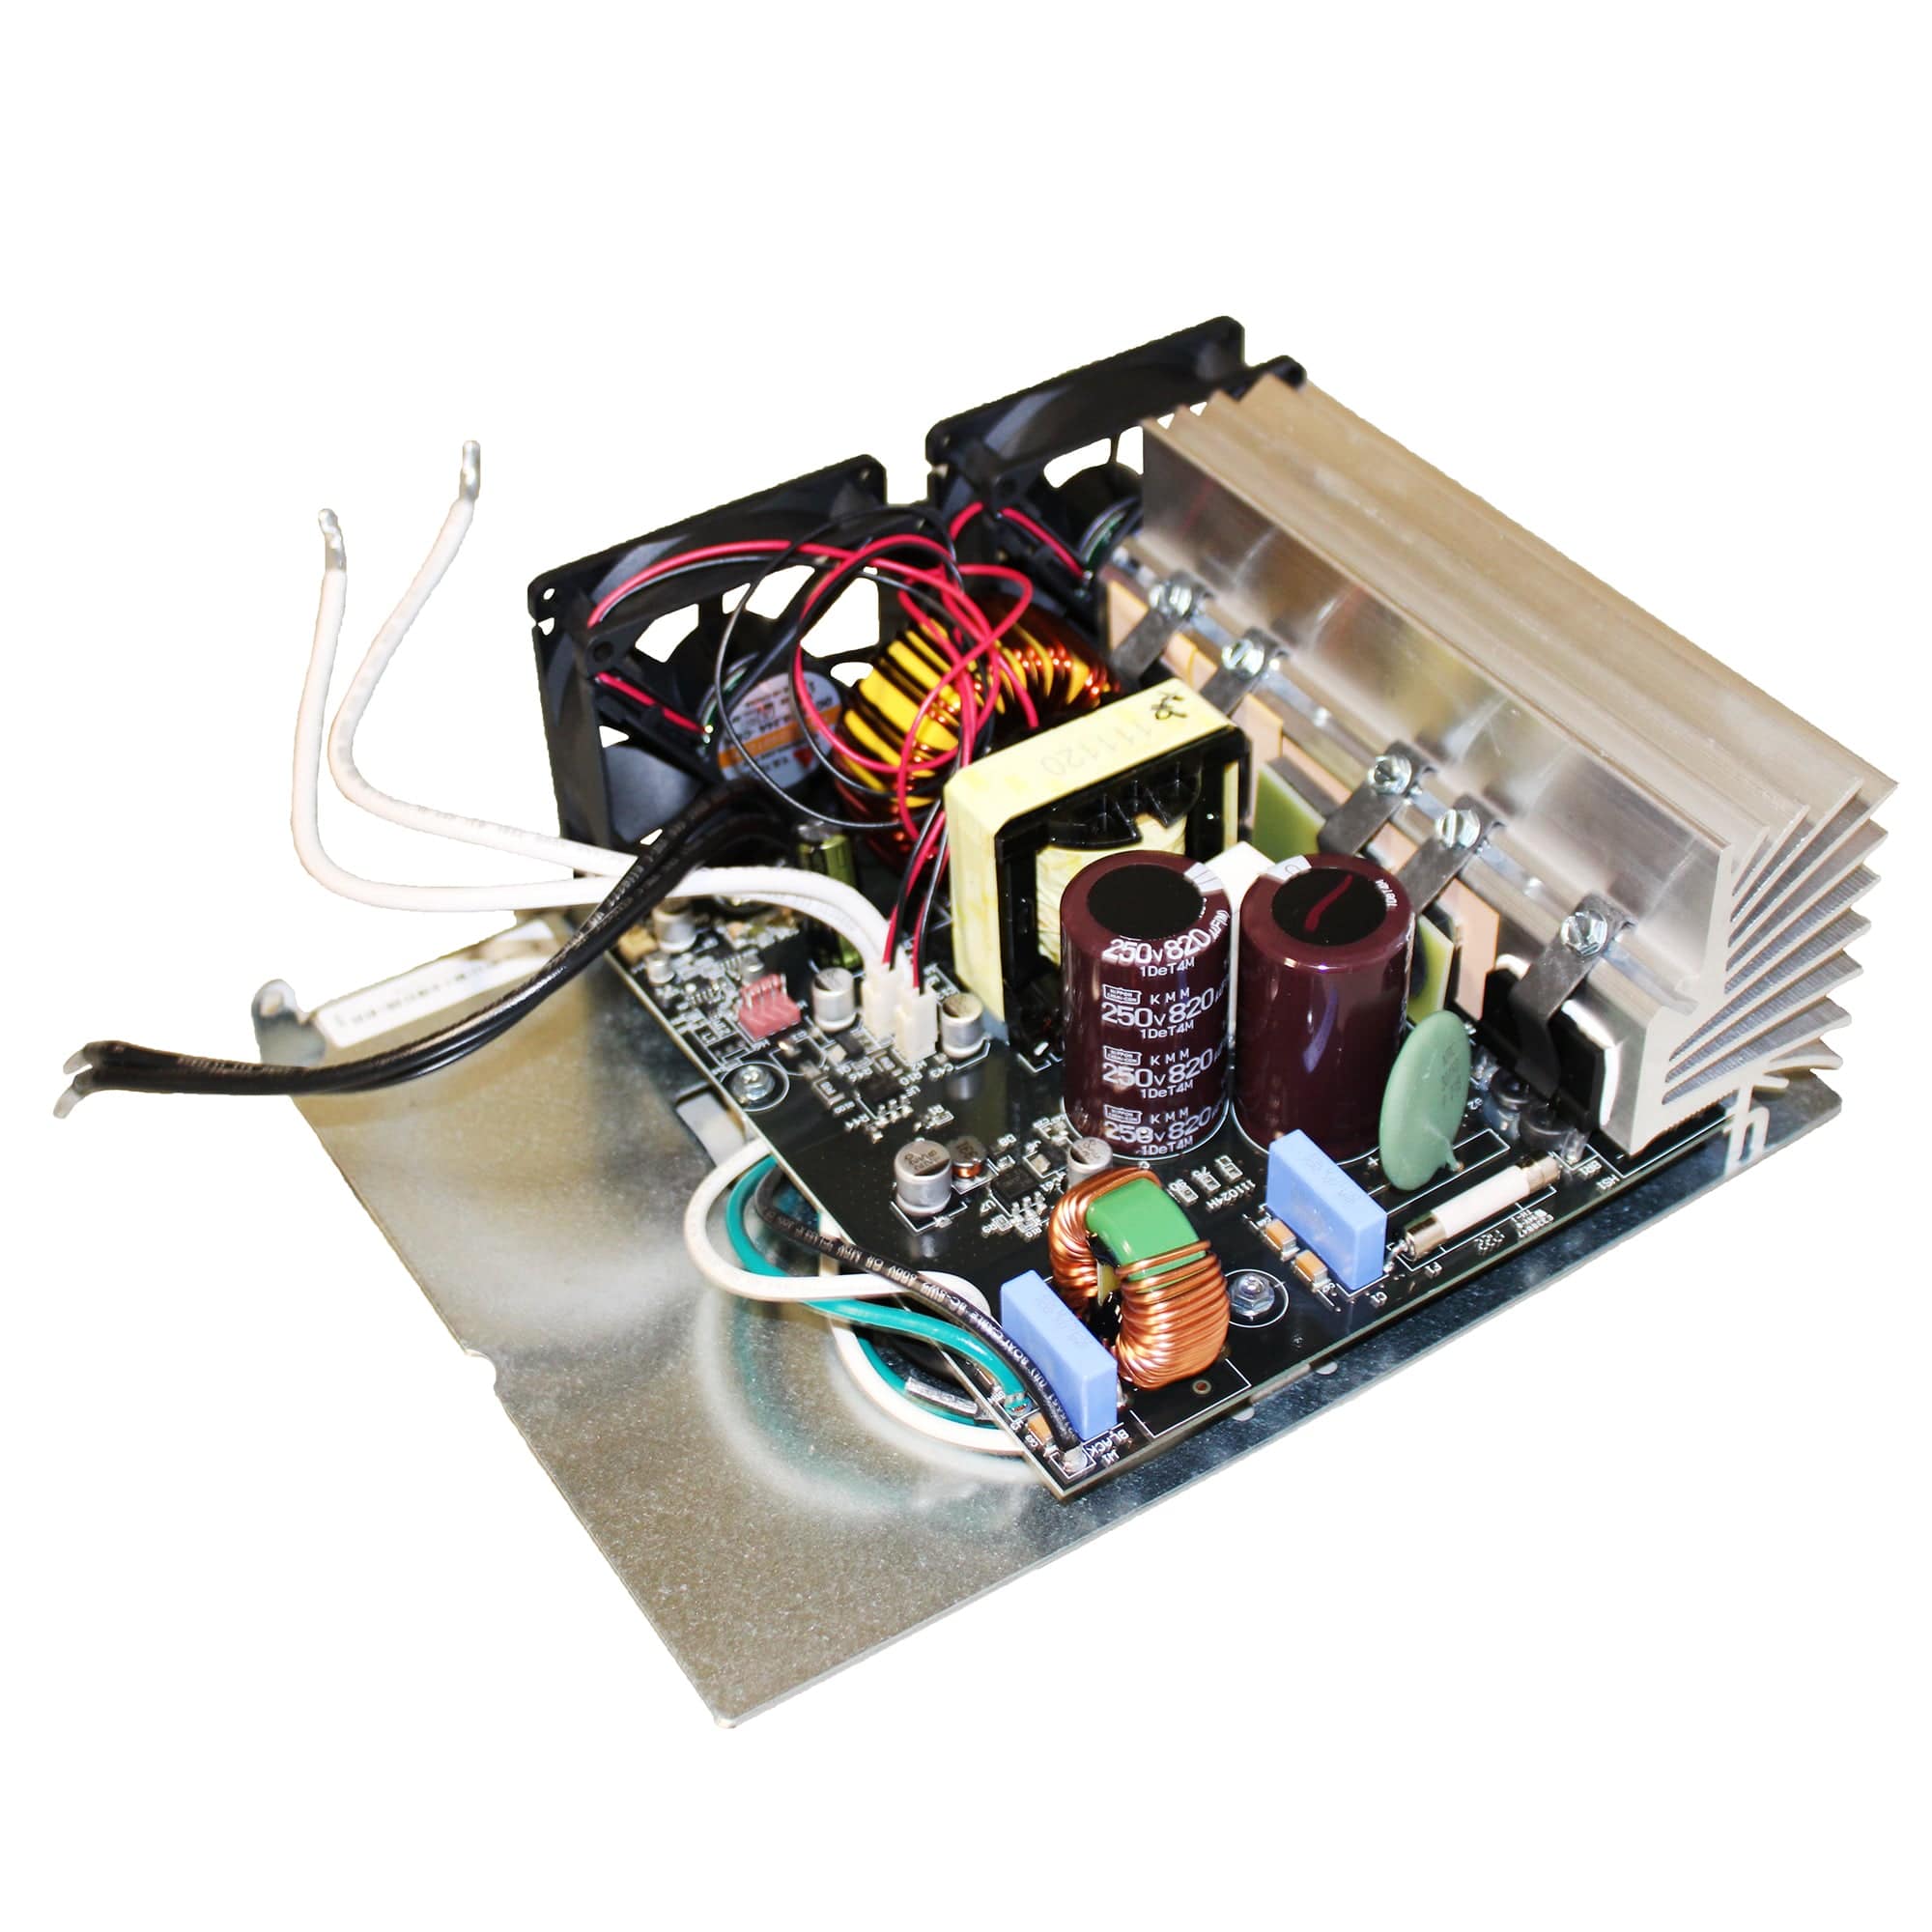 Progressive Dynamics PD4590CSV Inteli-Power Replacement Converter Section 90A